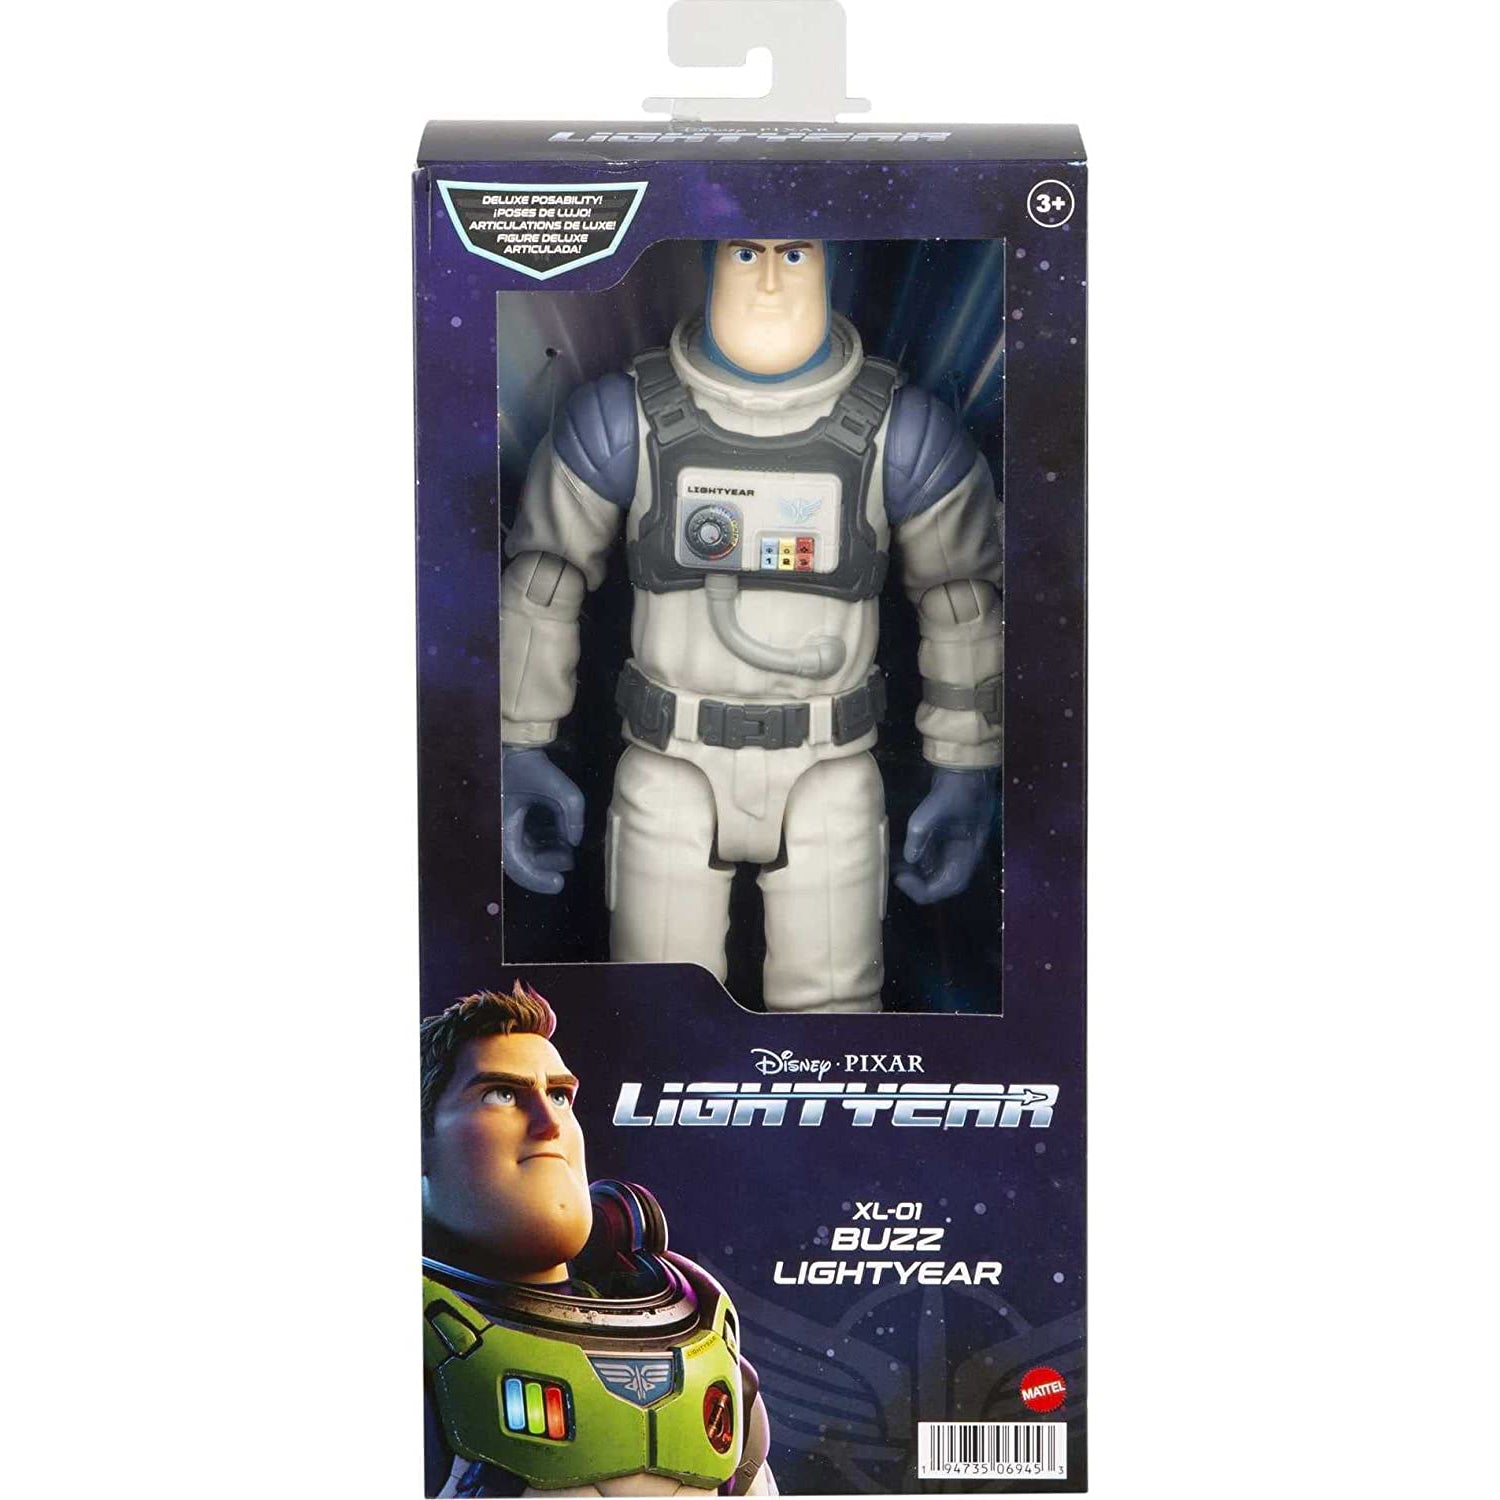 Lightyear 12 Inch XL-01 Buzz Lightyear Figure